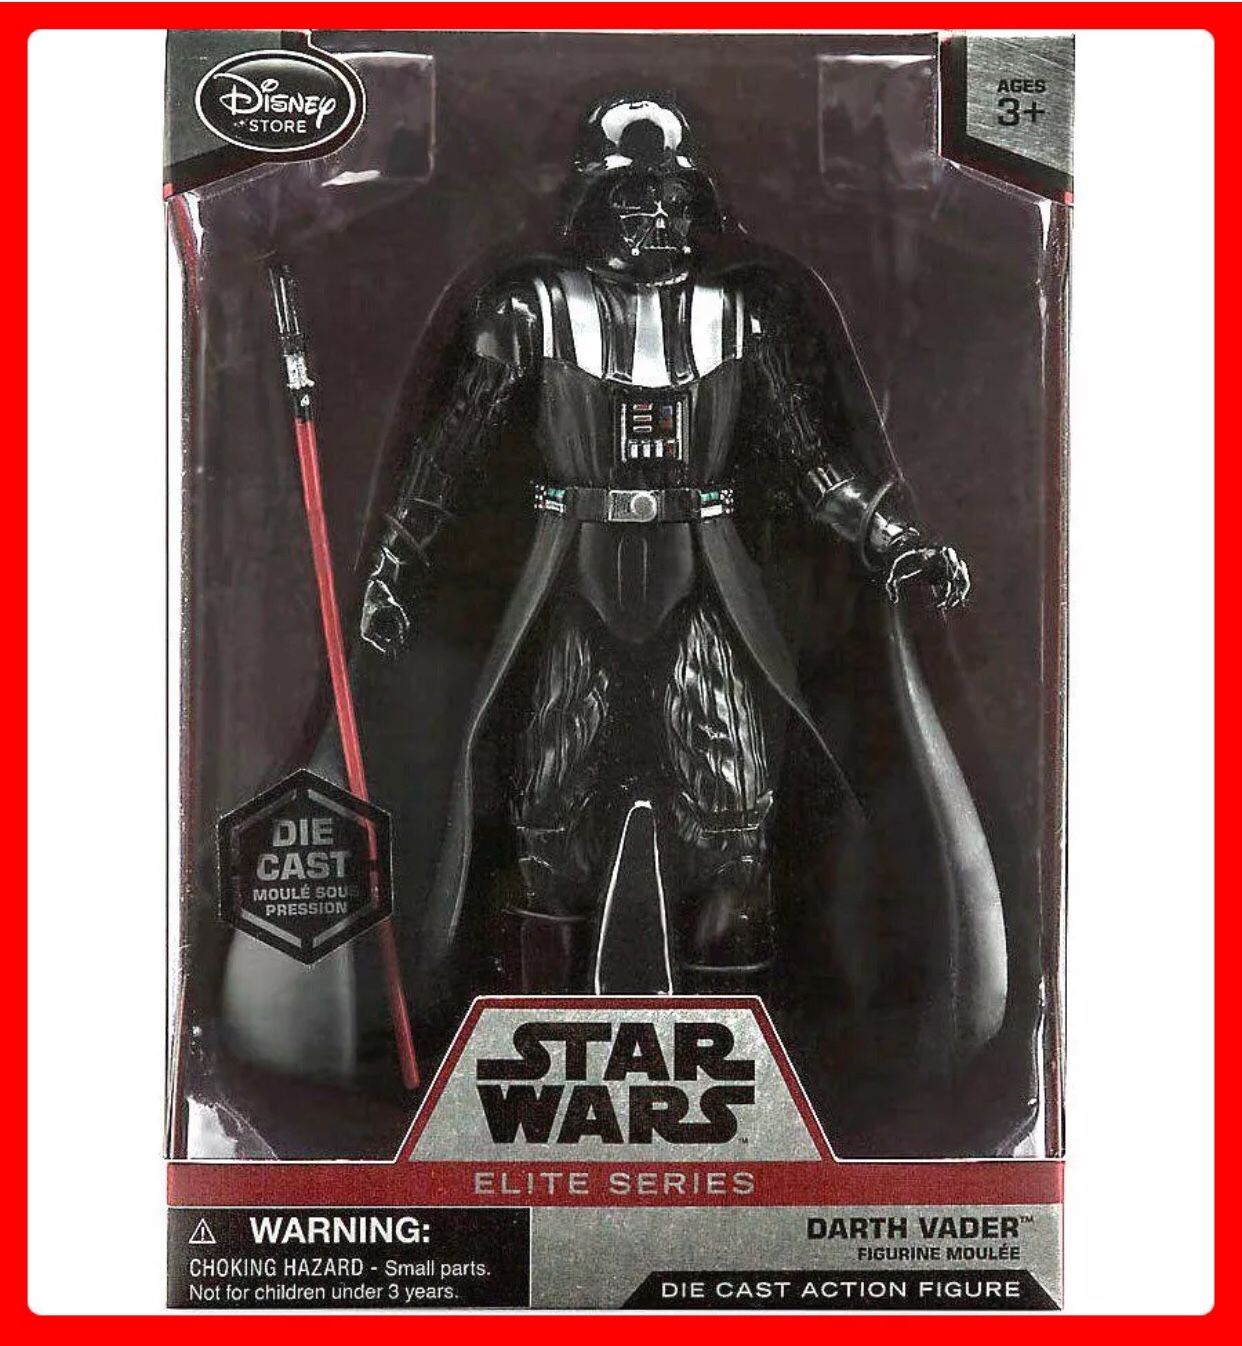 Star Wars Darth Vader Elite Series Die Cast Action Figure - 7'' - Disney Store Collector Collectible